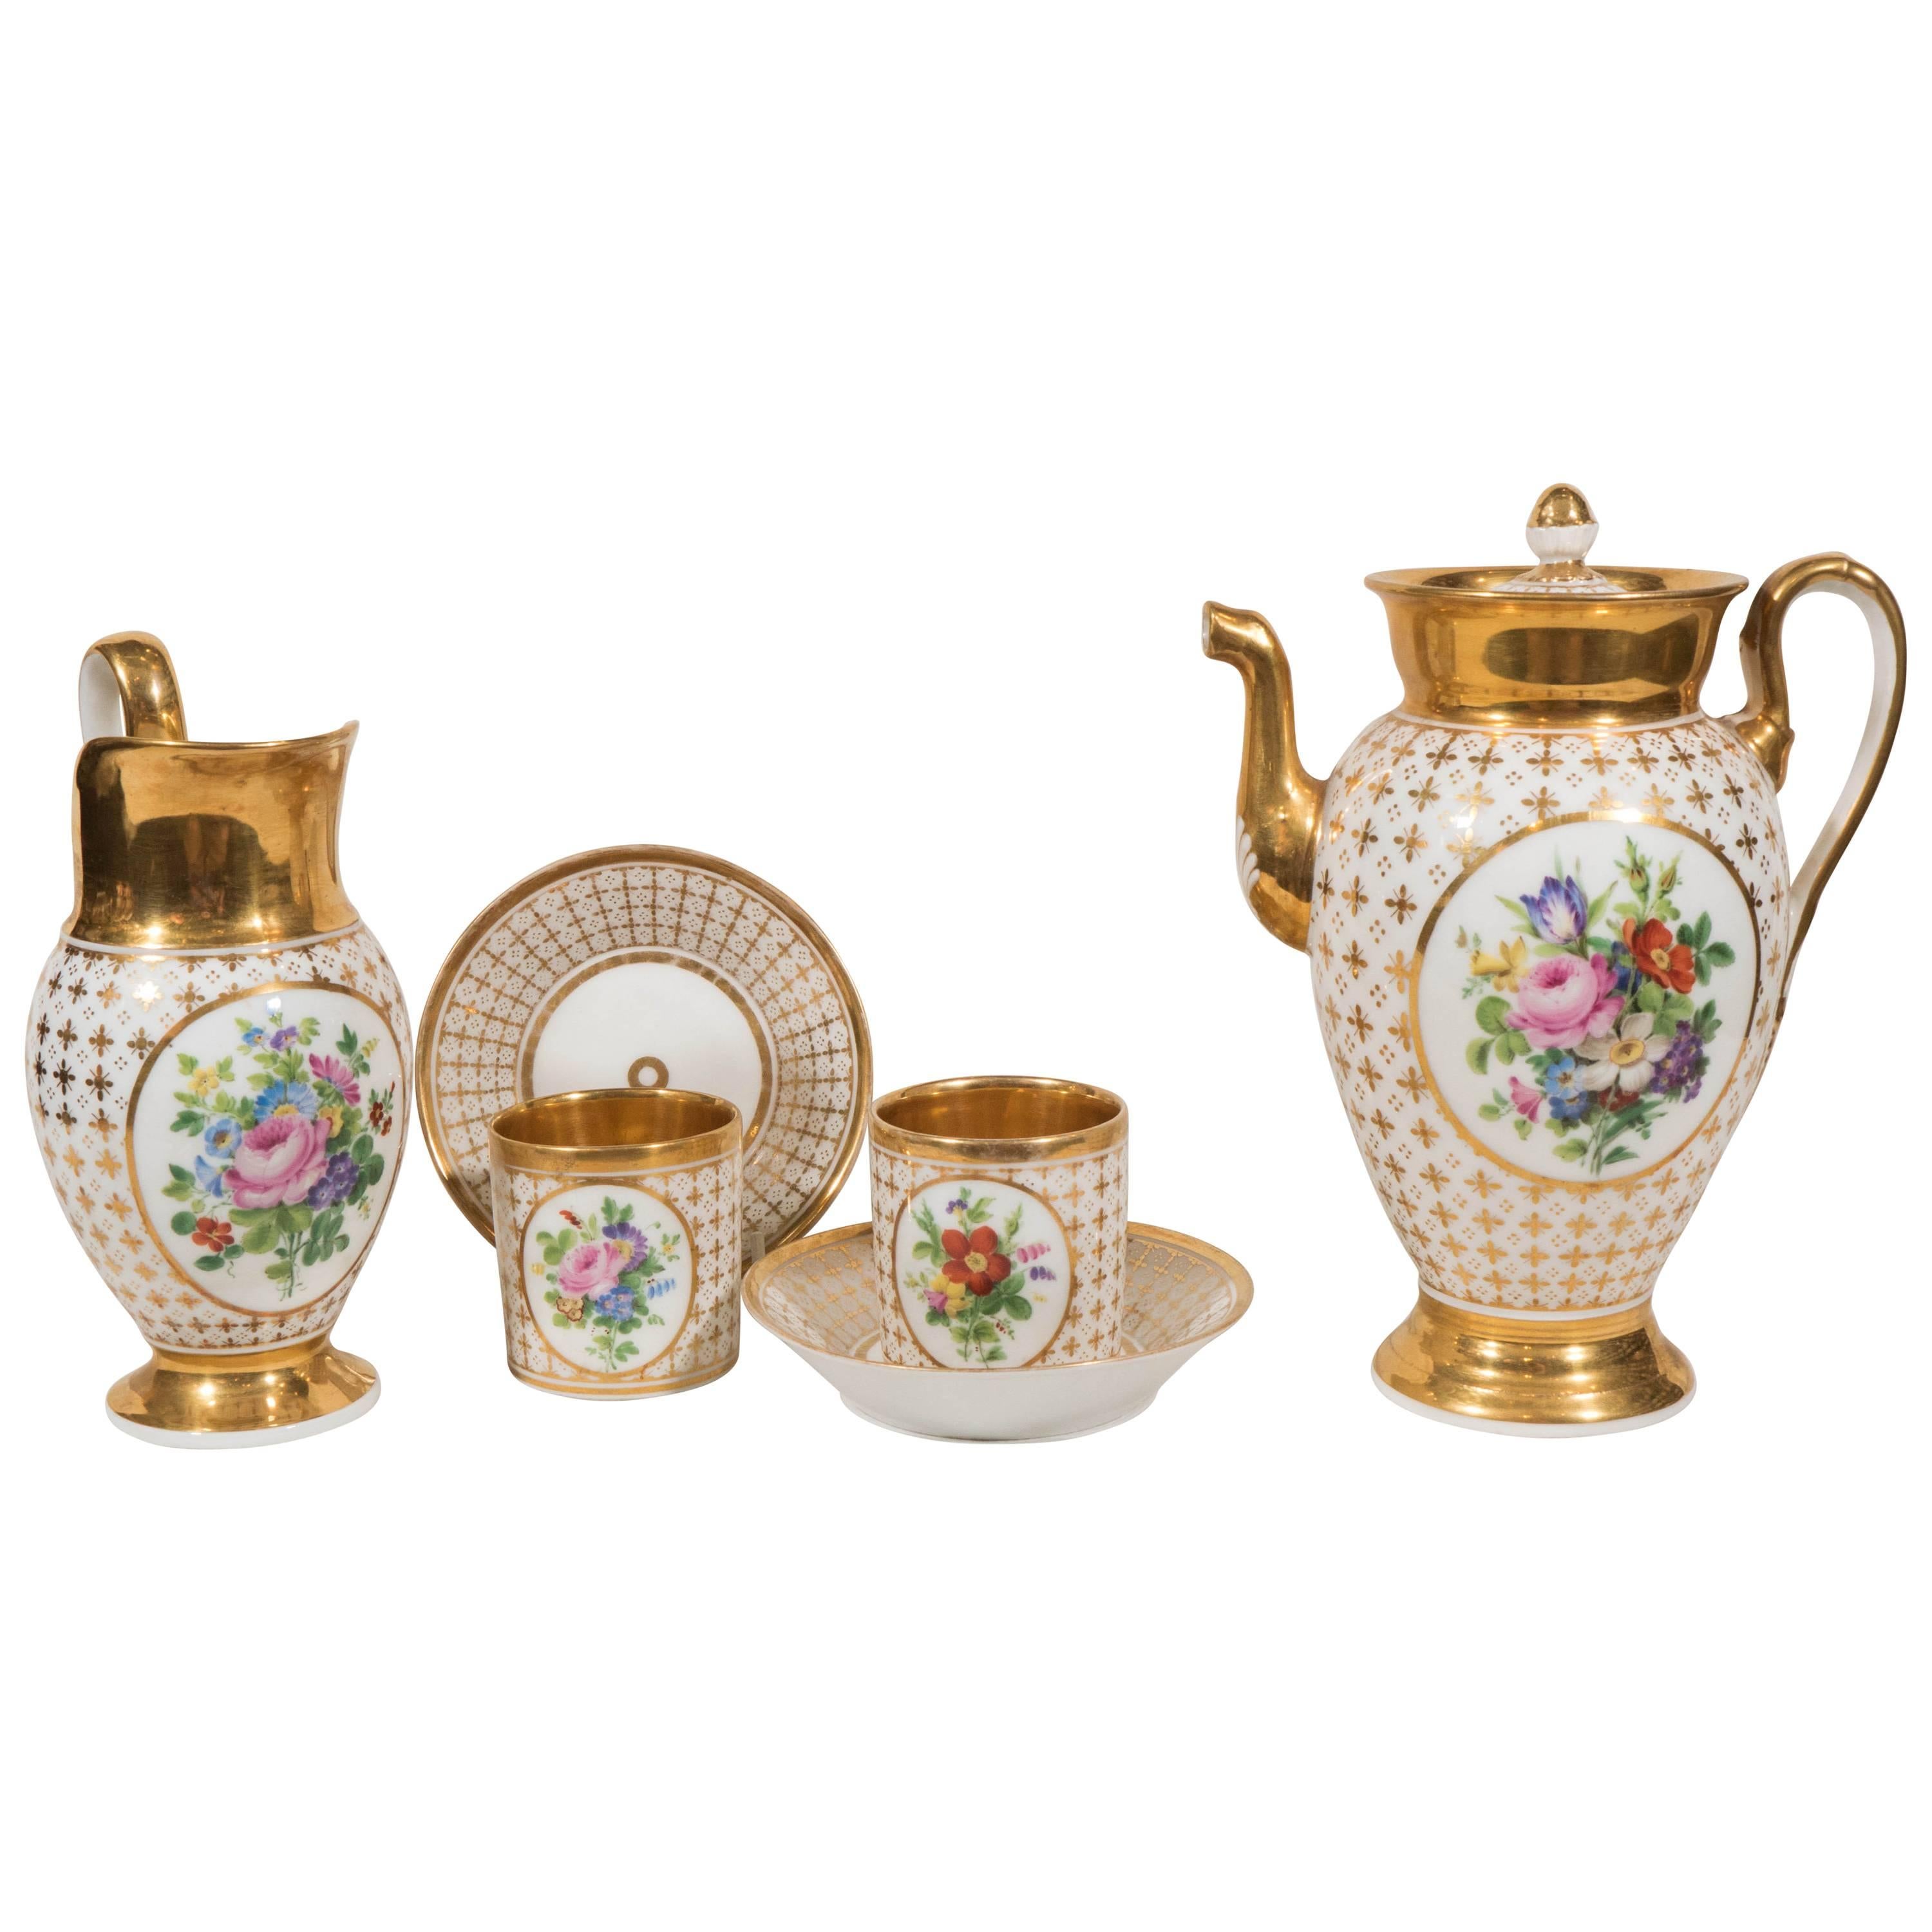 Demitasse Set Antique Paris Porcelain Made in France circa 1830